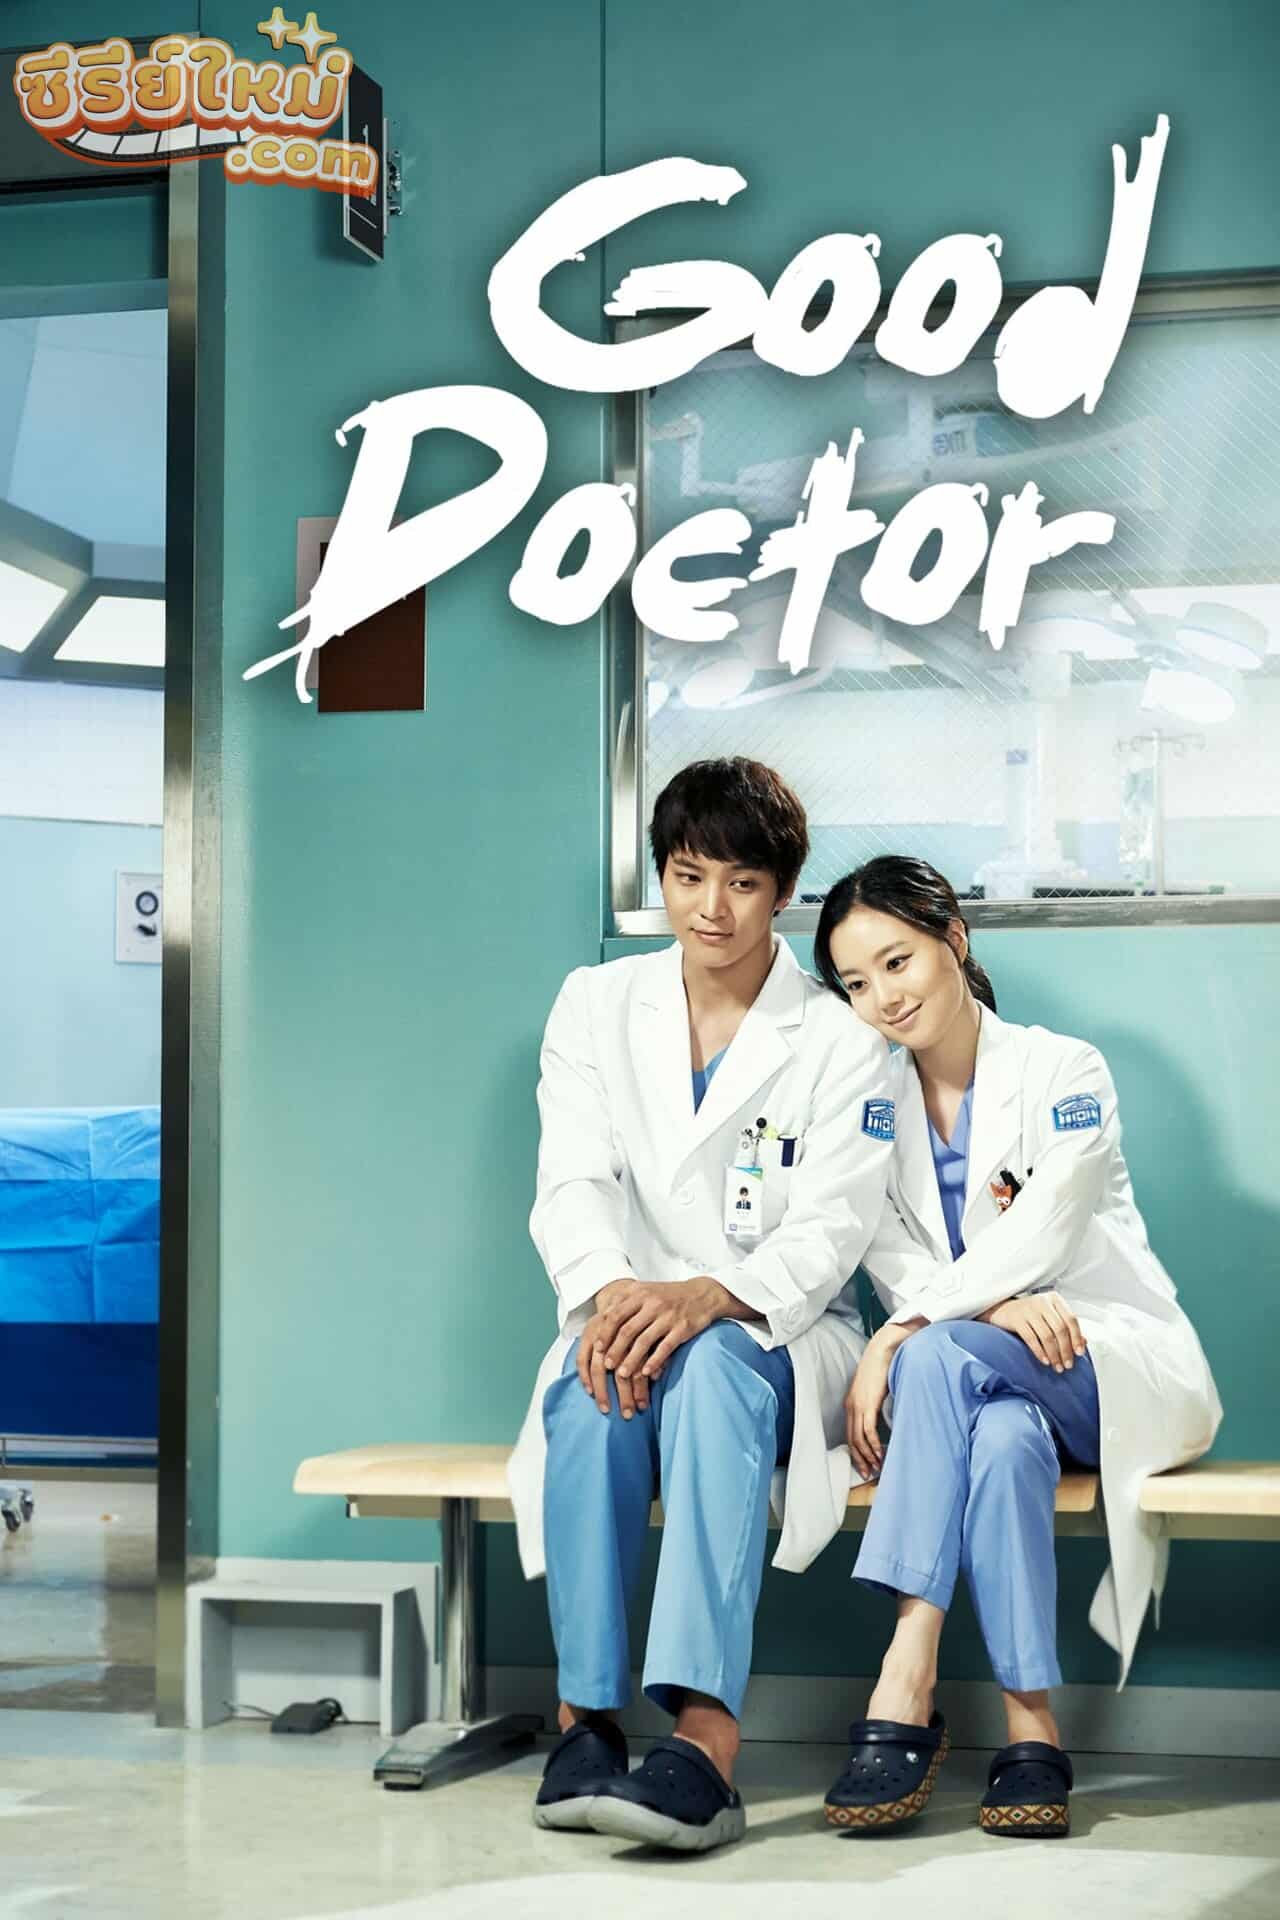 Good Doctor ฟ้าส่งผมมาเป็นหมอ (2013)